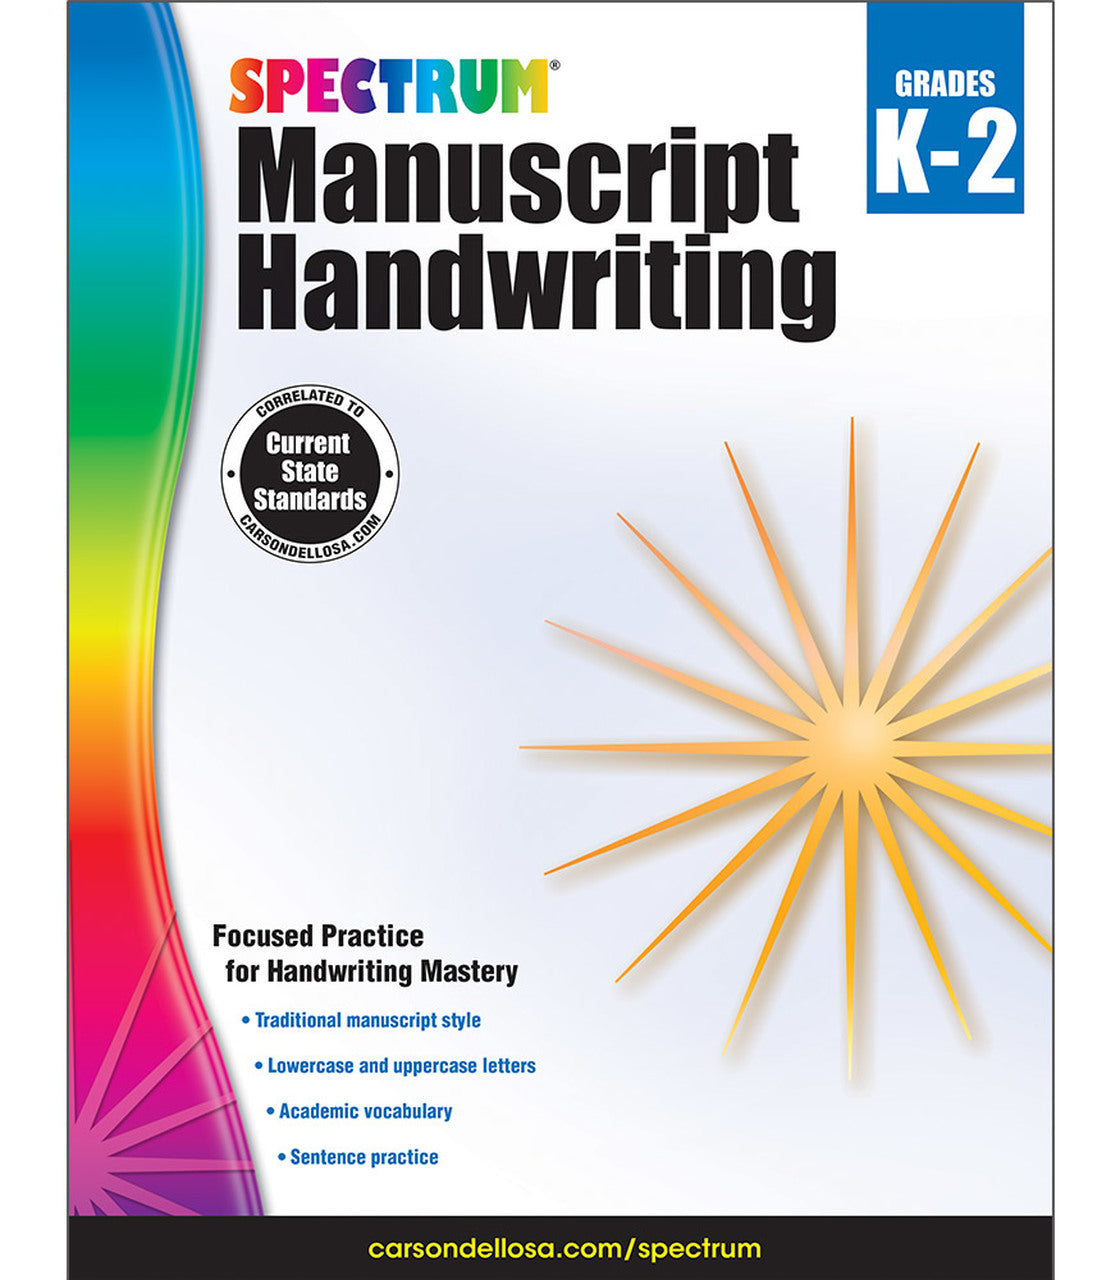 Handwriting: Spectrum Manuscript, K-2